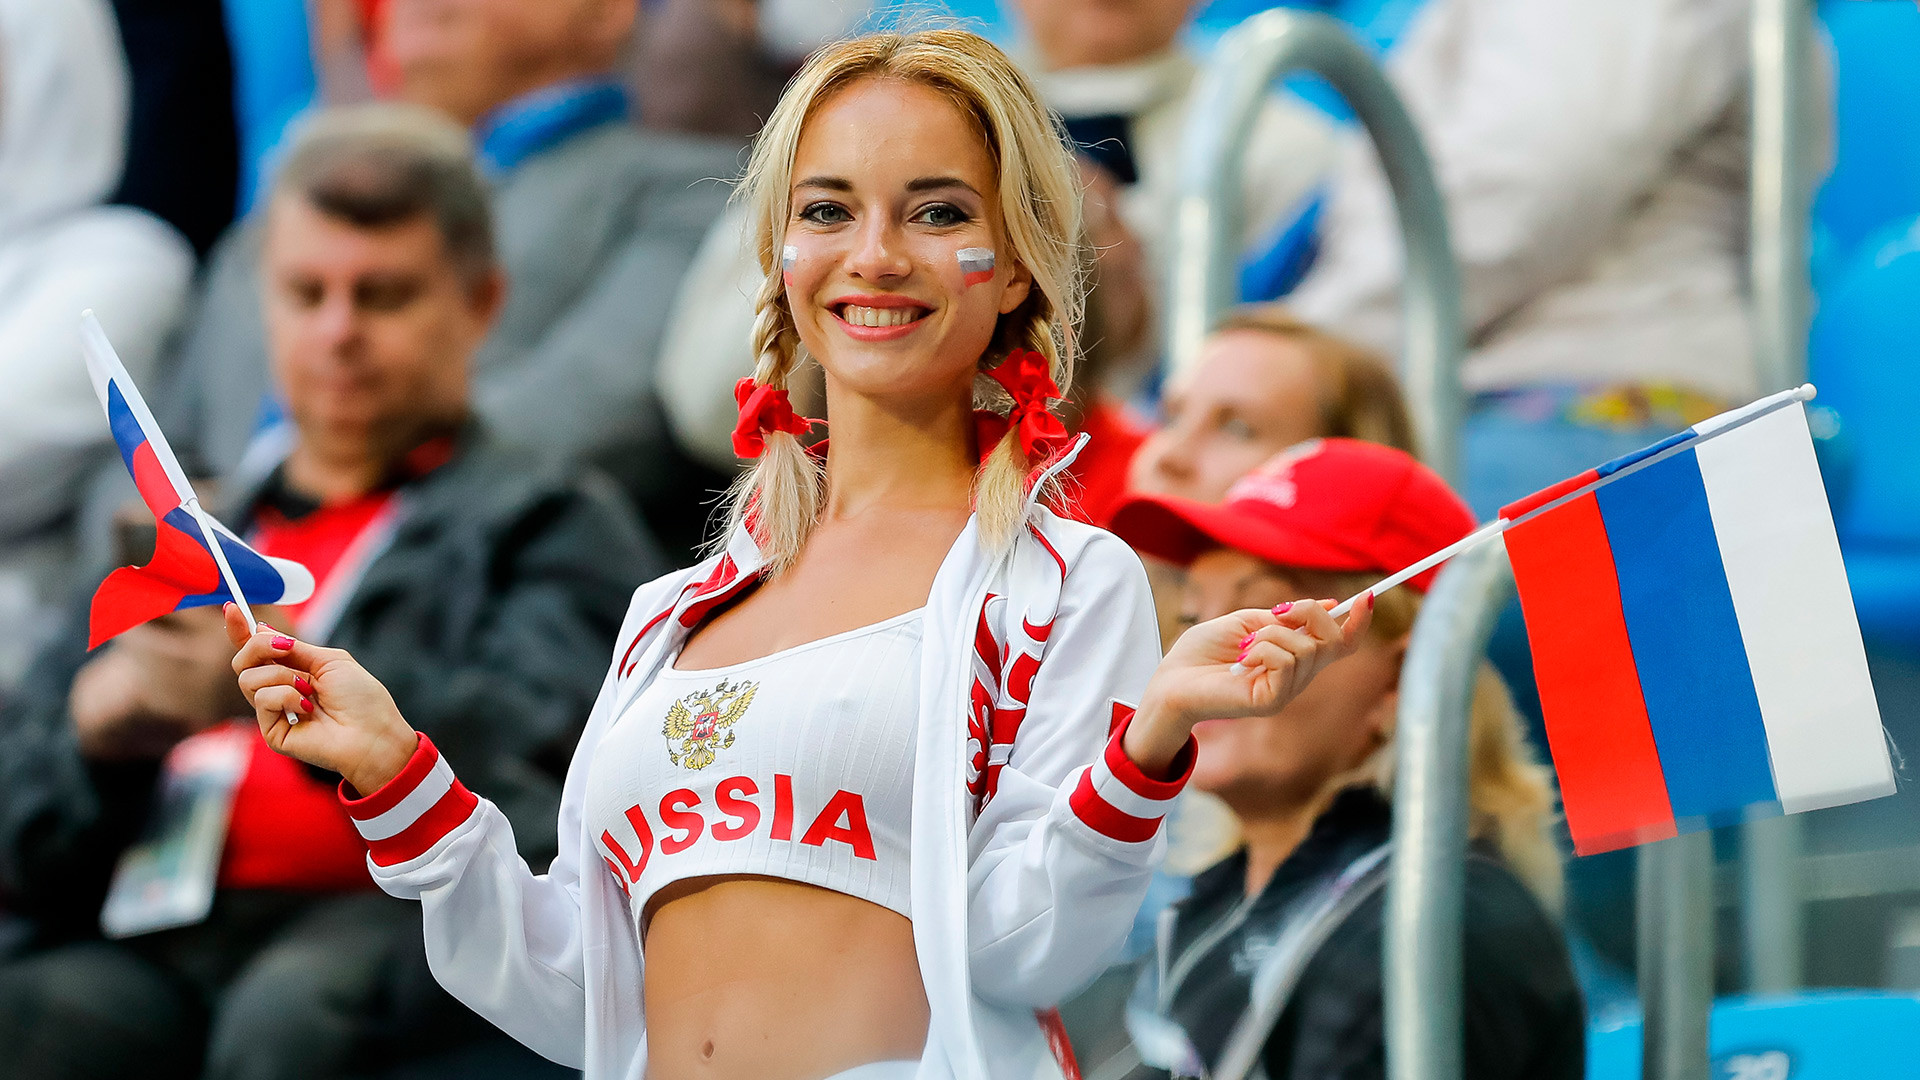 If you think Russian football fans wear kokoshnik and ushanka hats ...